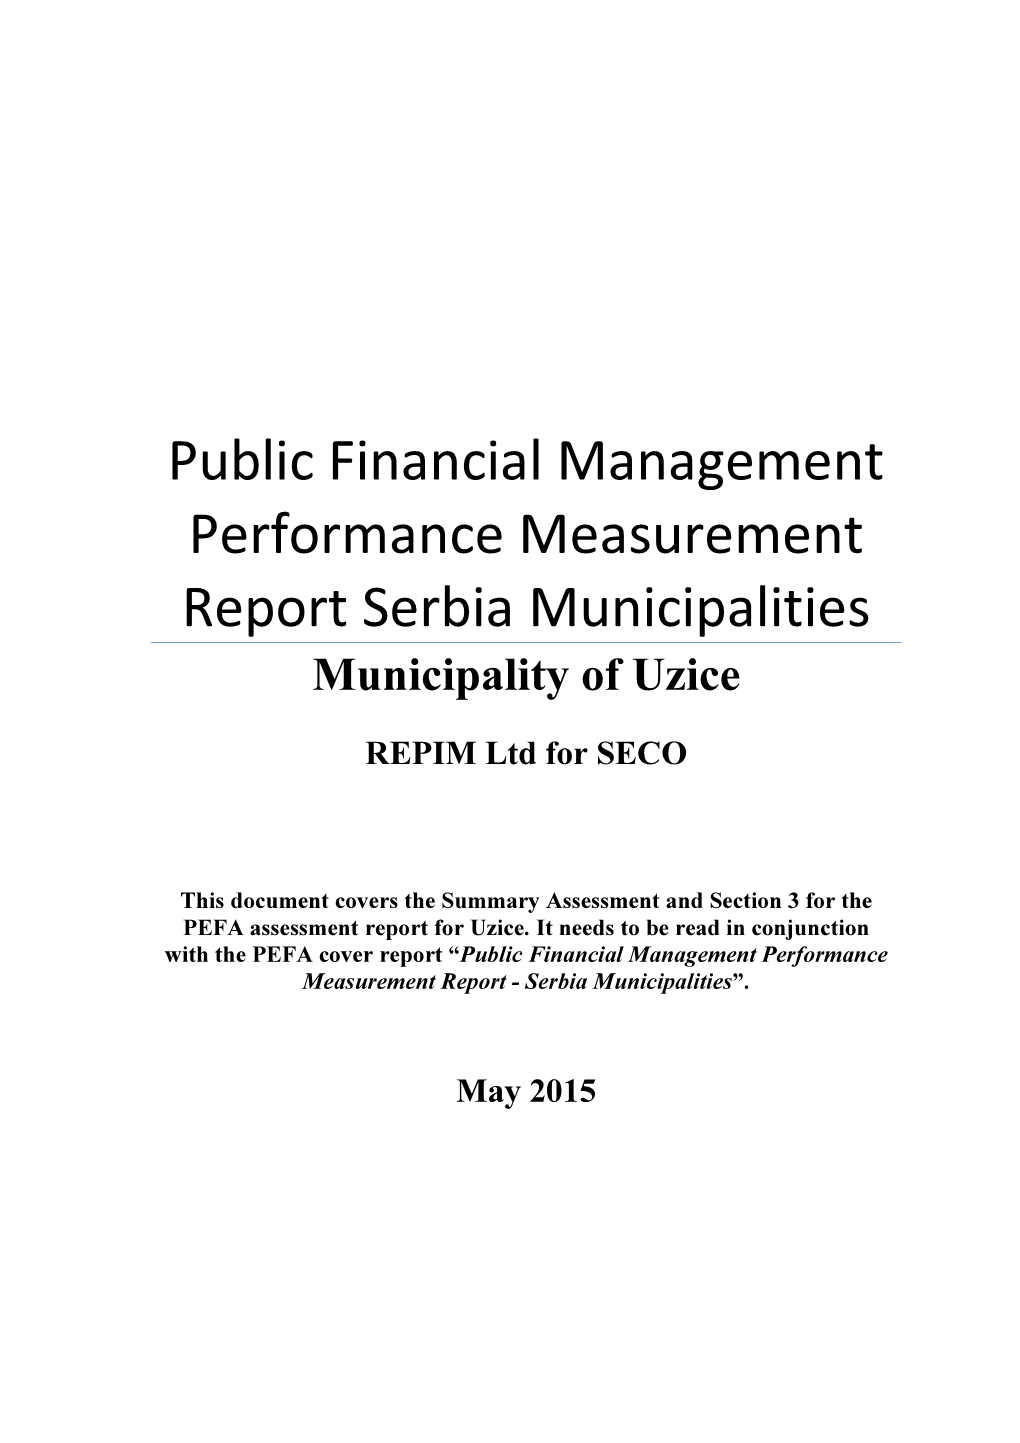 Public Financial Management Performance Measurement Report Serbia Municipalities Municipality of Uzice